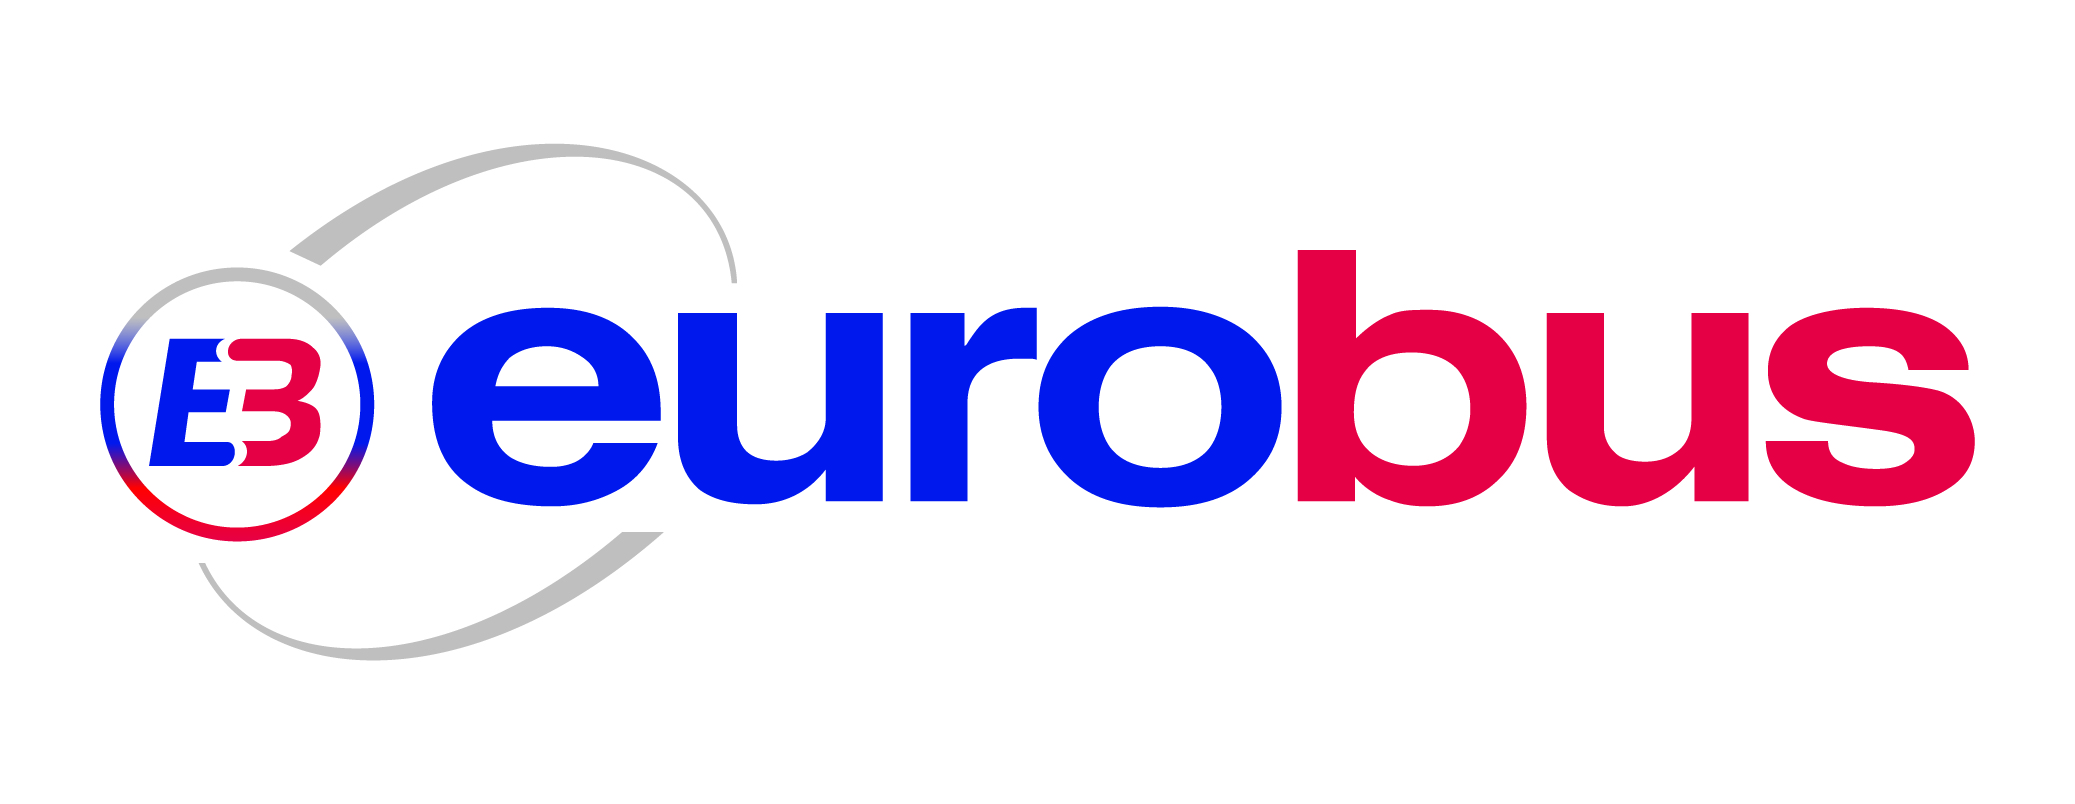 20160122130133_logo_eurobus.jpg